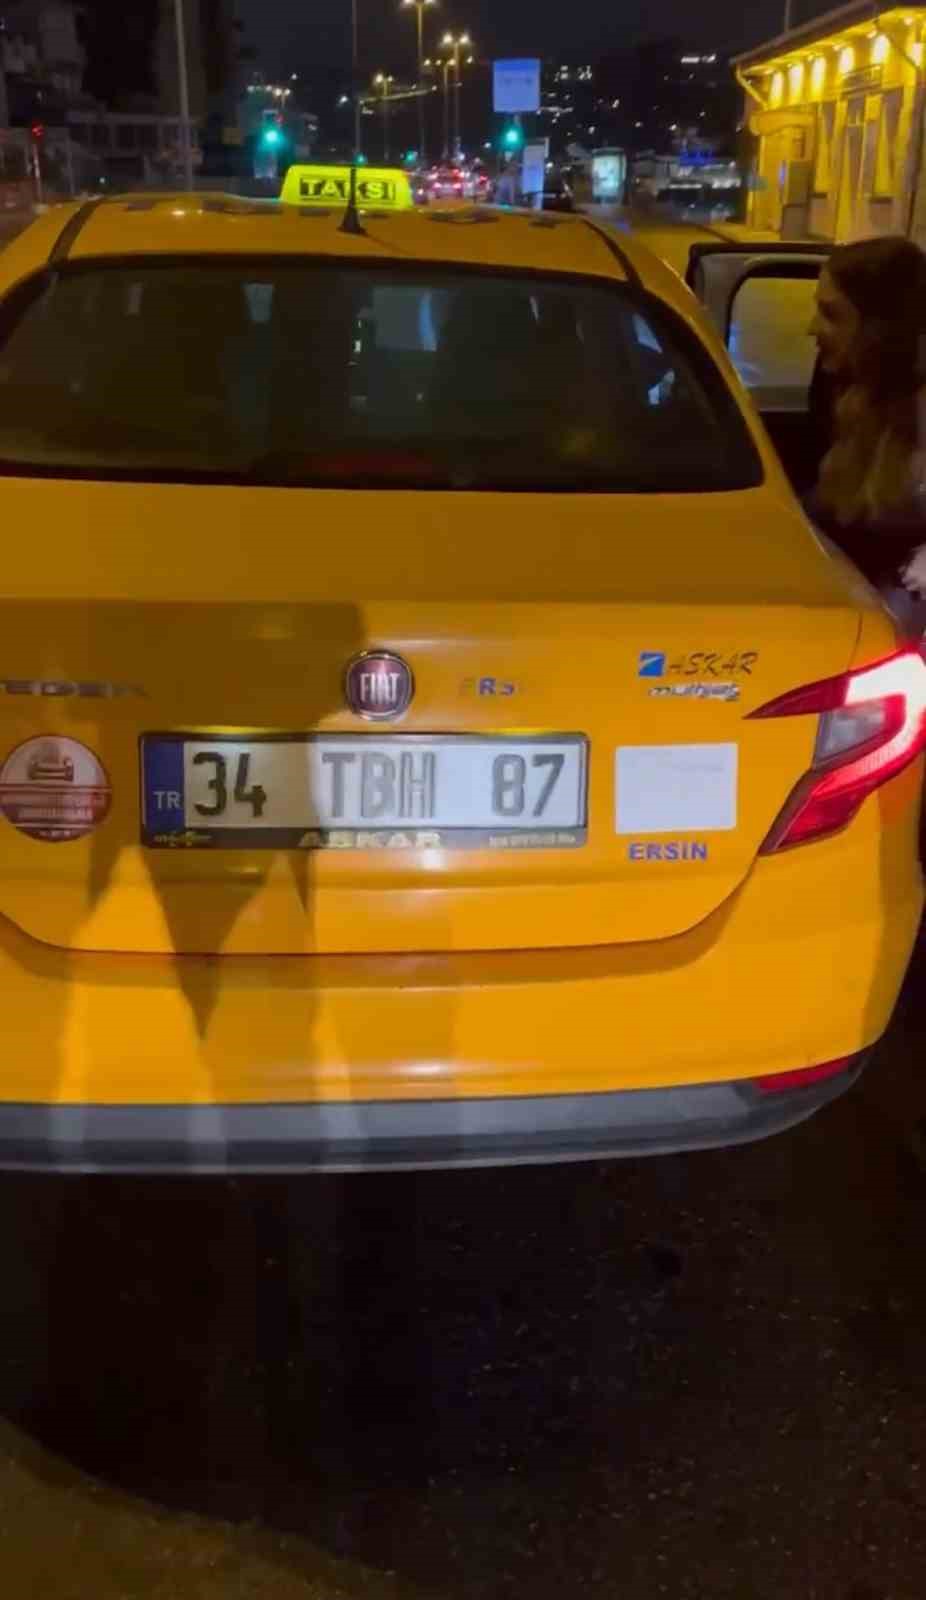 istanbulda taksi krizleri kamerada surucu taksimetre acmayip bin lira istedi yolcu ise ucreti odemedi nNZekR1F